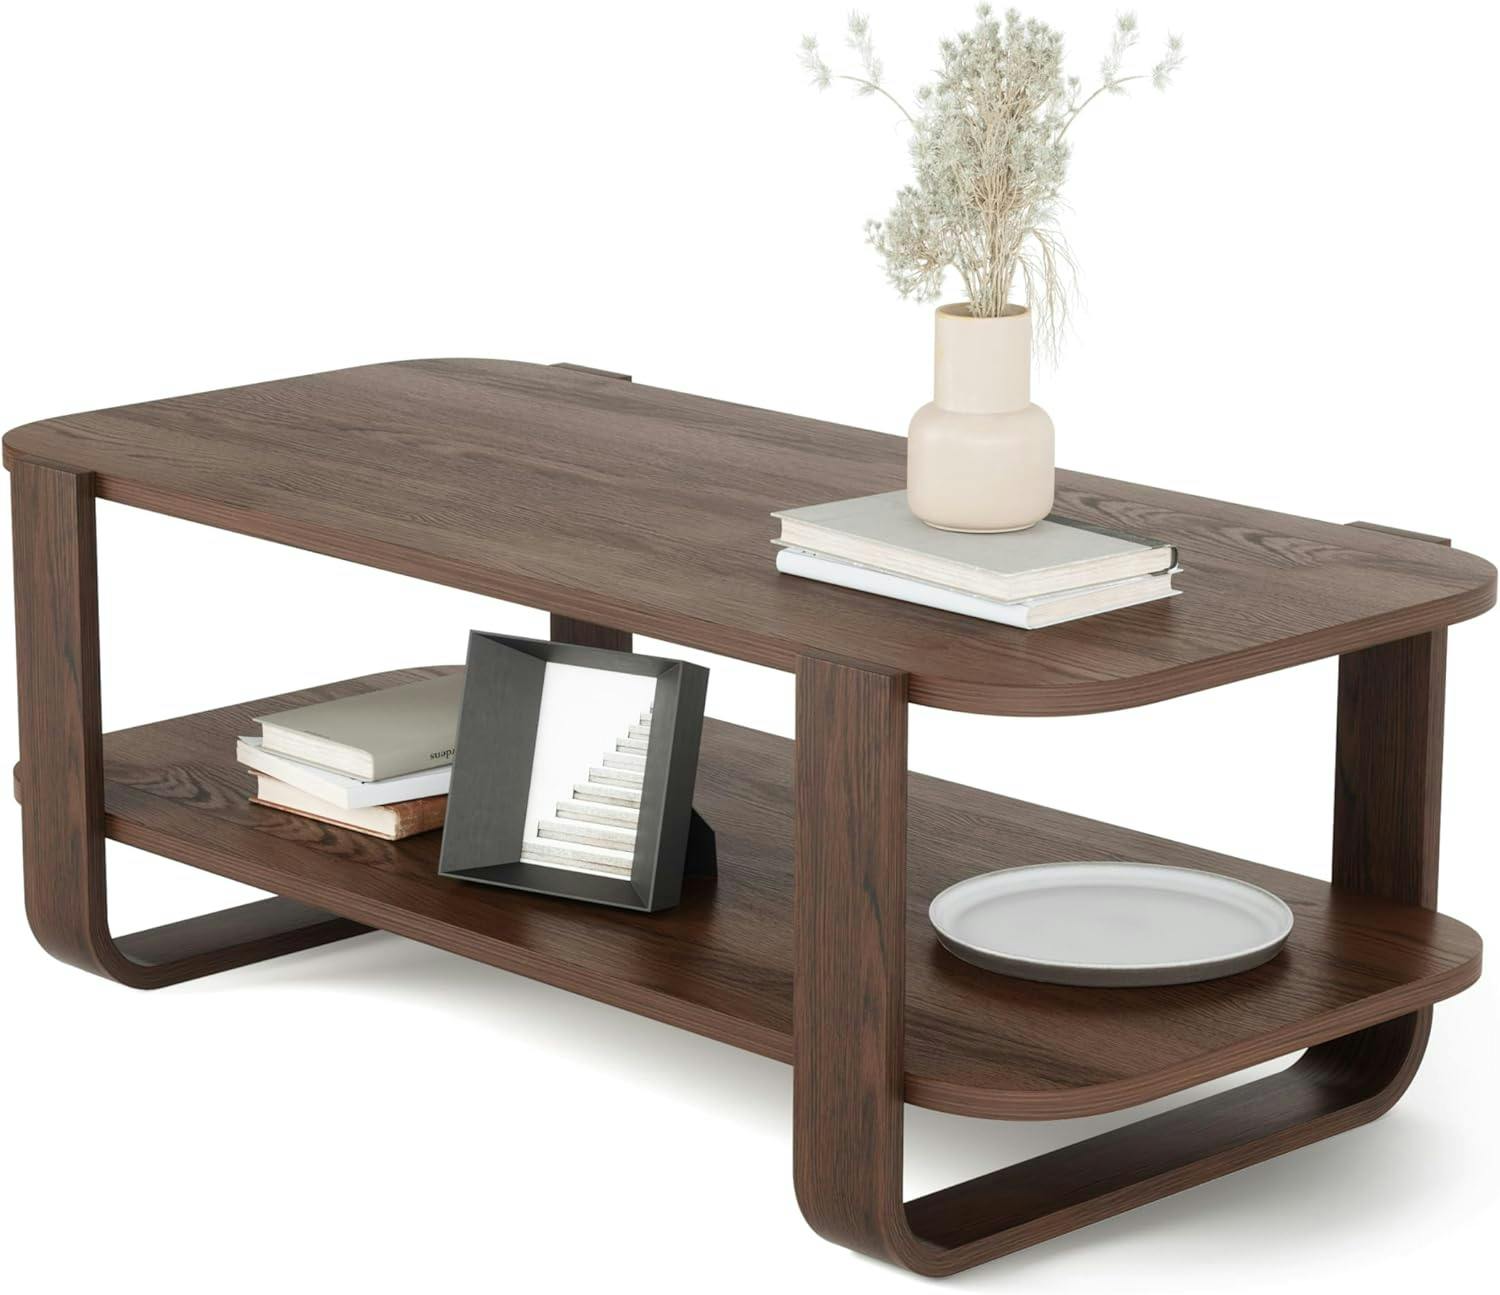 Aged Walnut Bellwood Rectangular Coffee Table with Storage